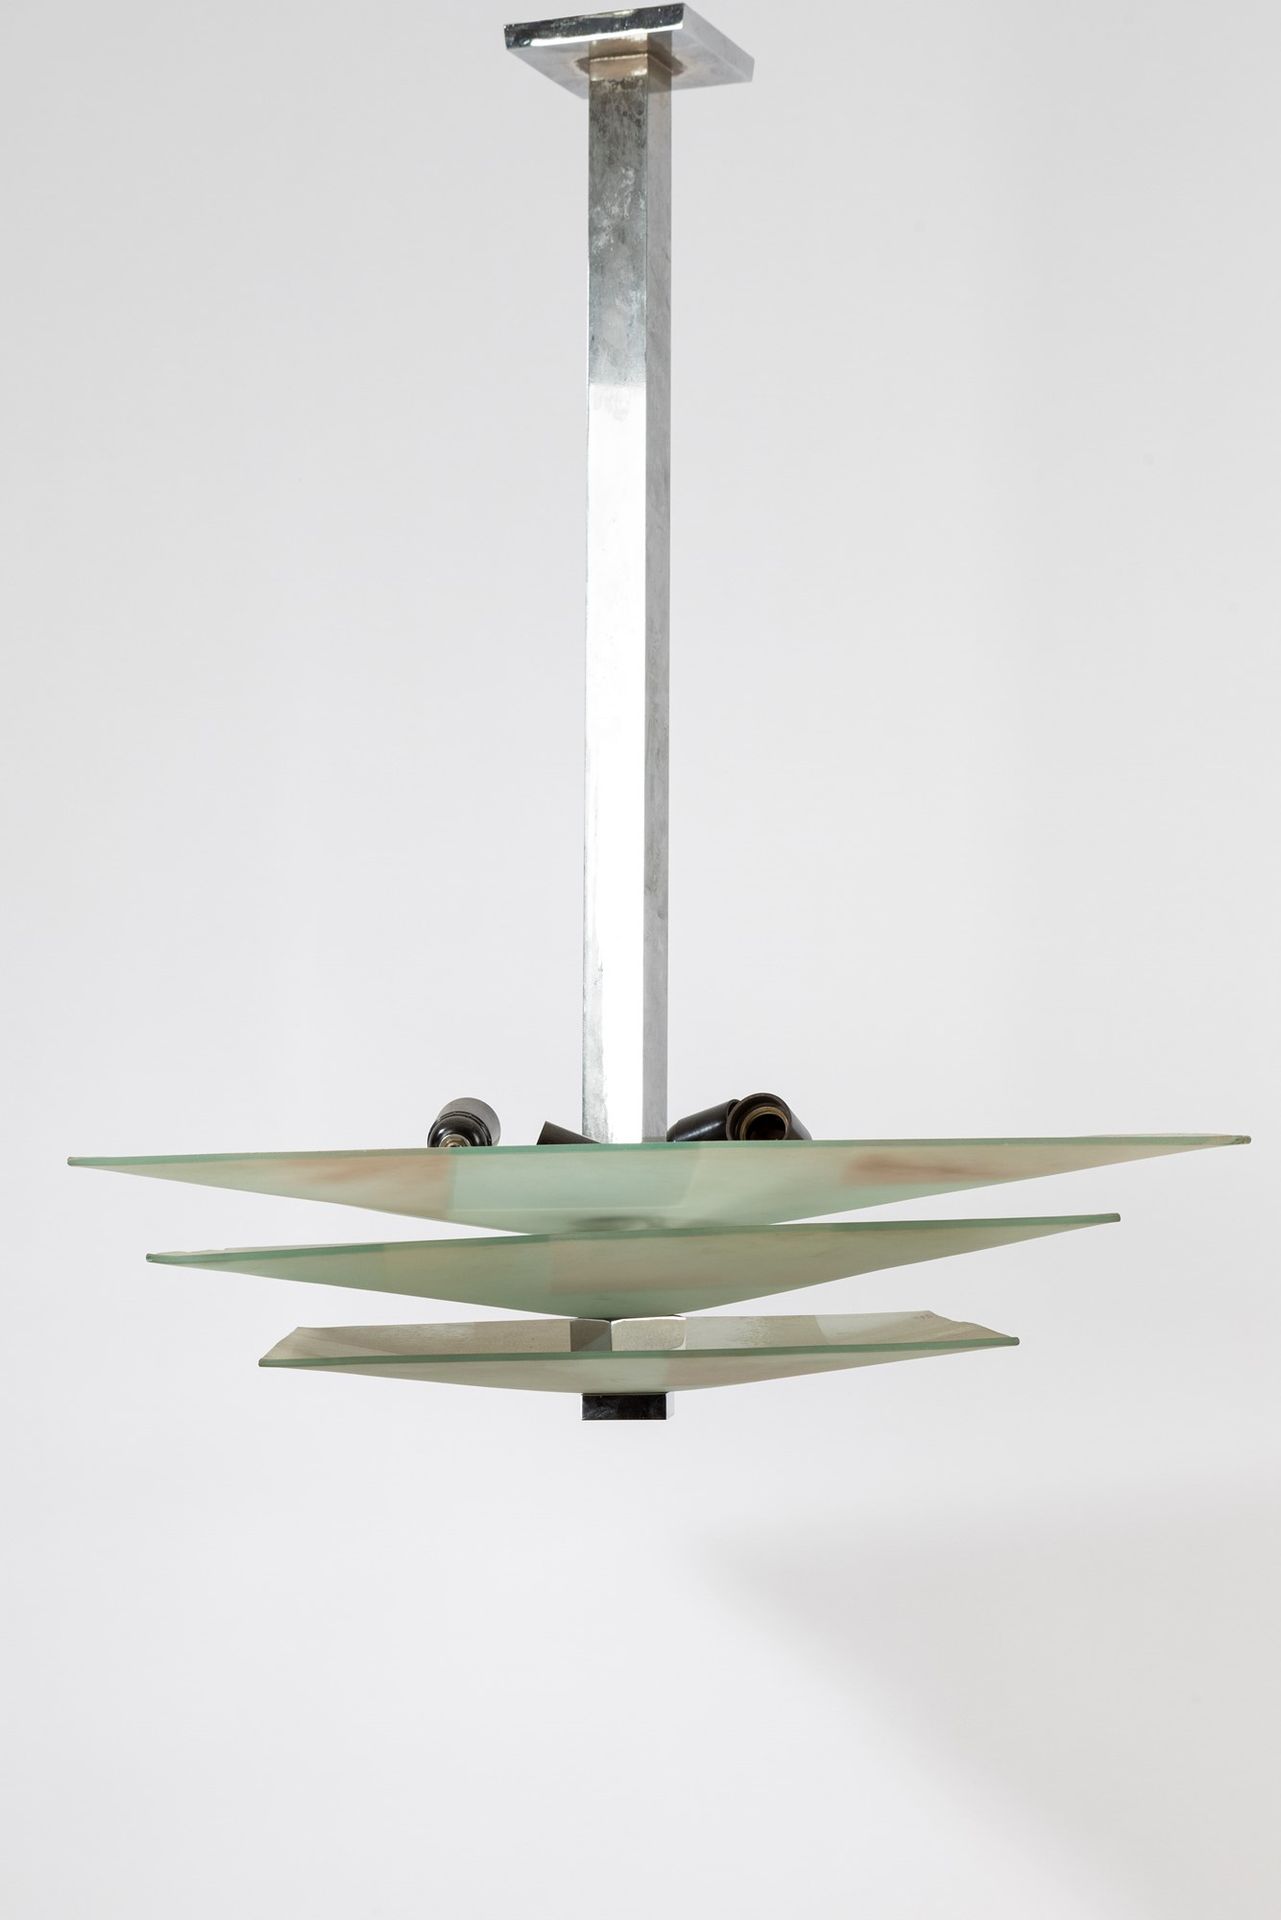 ITALIAN MANUFACTURE Pendant lamp, 70's period

h cm 80 x 60
chromed metal struct&hellip;